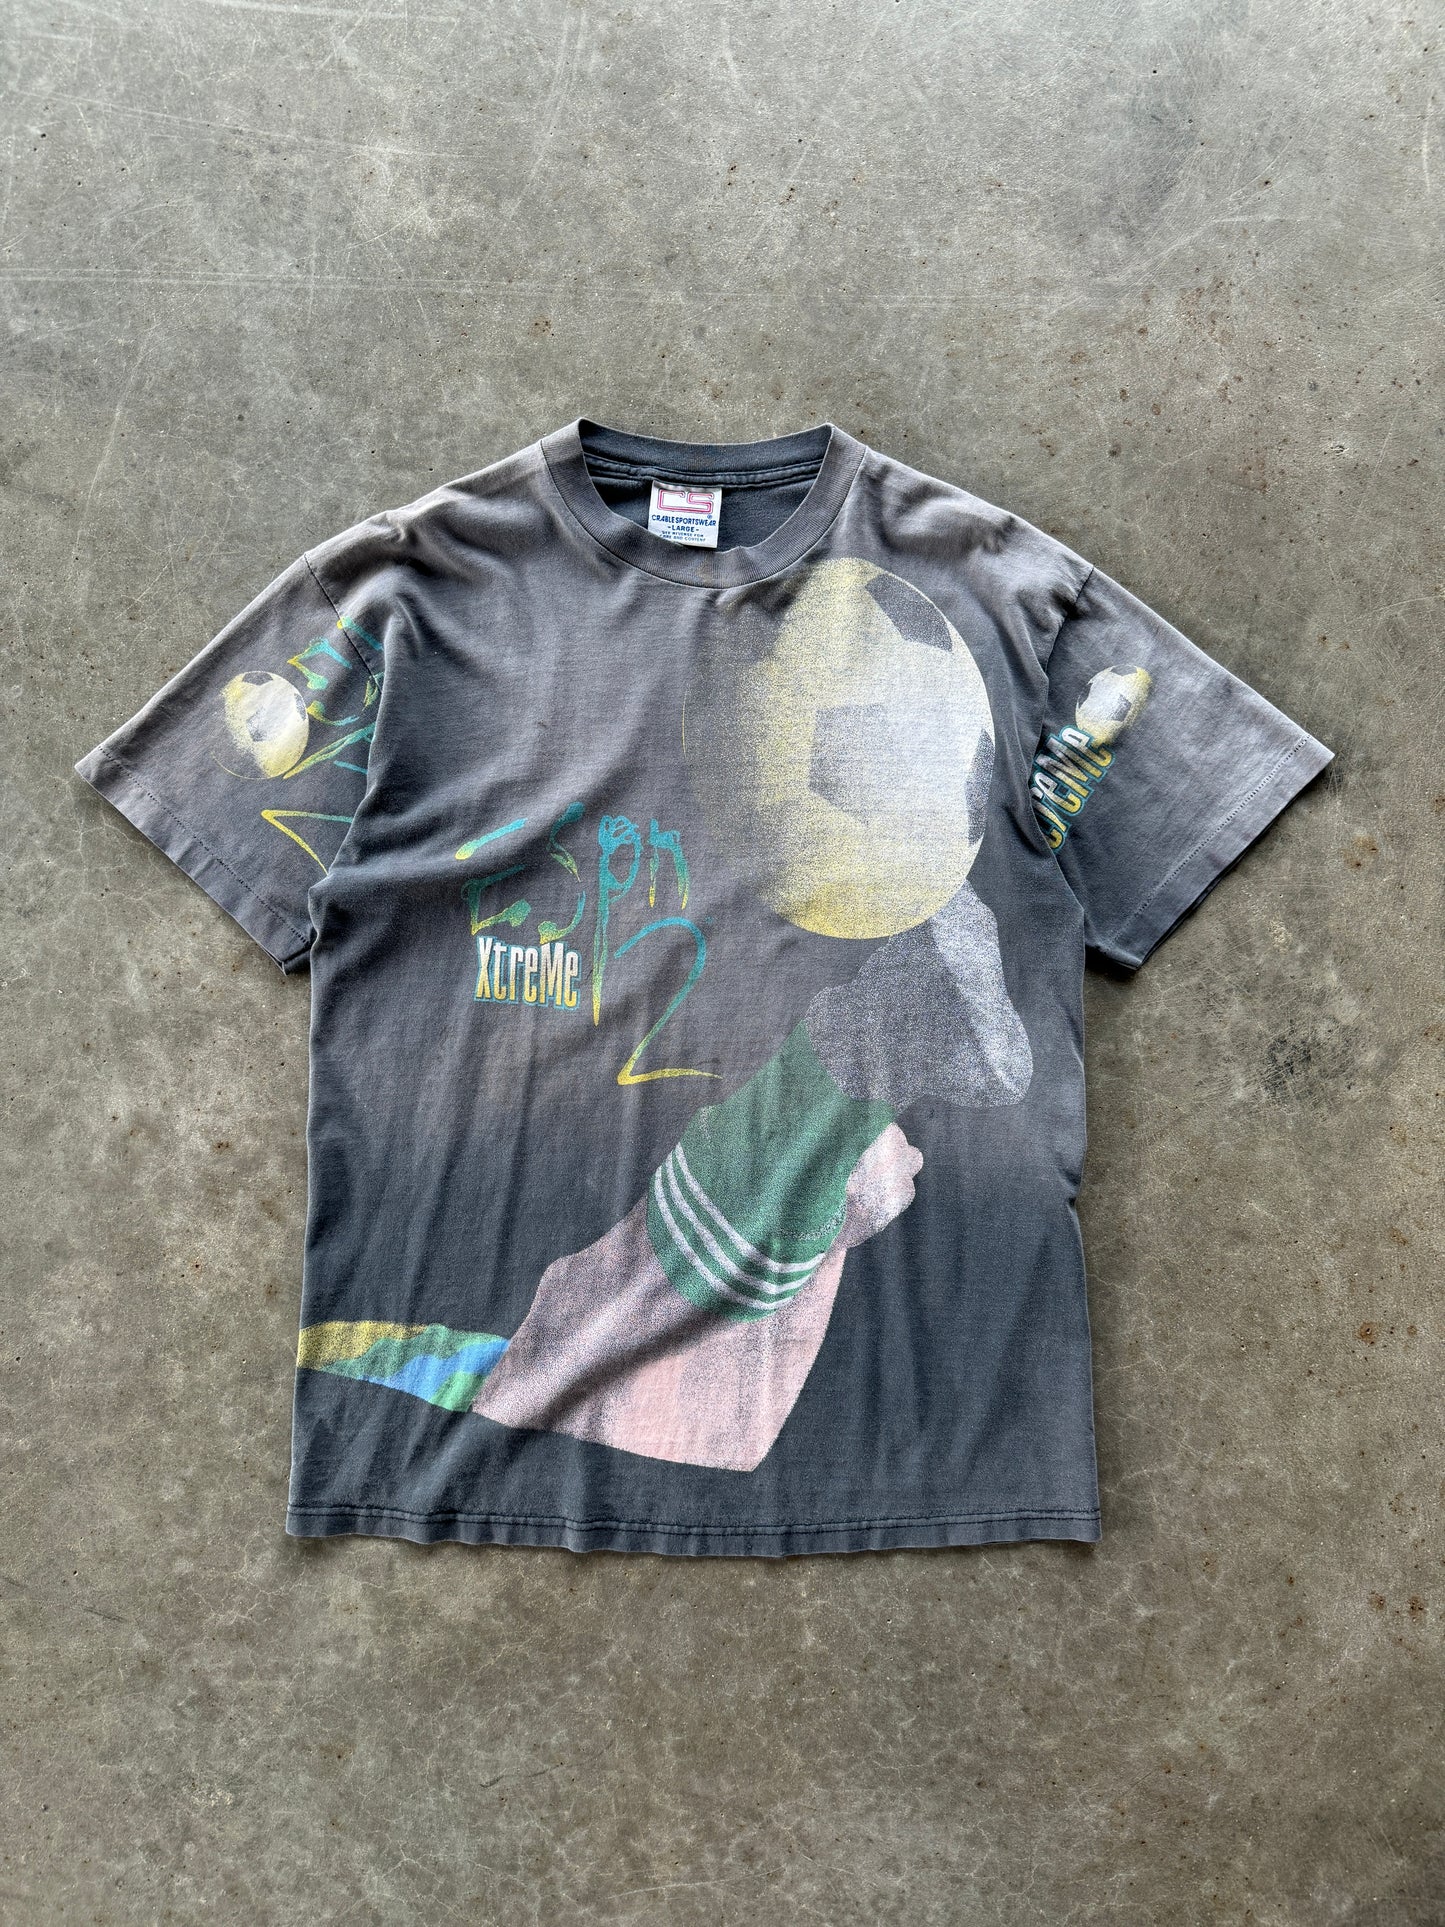 Vintage Single Stitch ESPN 2 Extreme Soccer Shirt - L